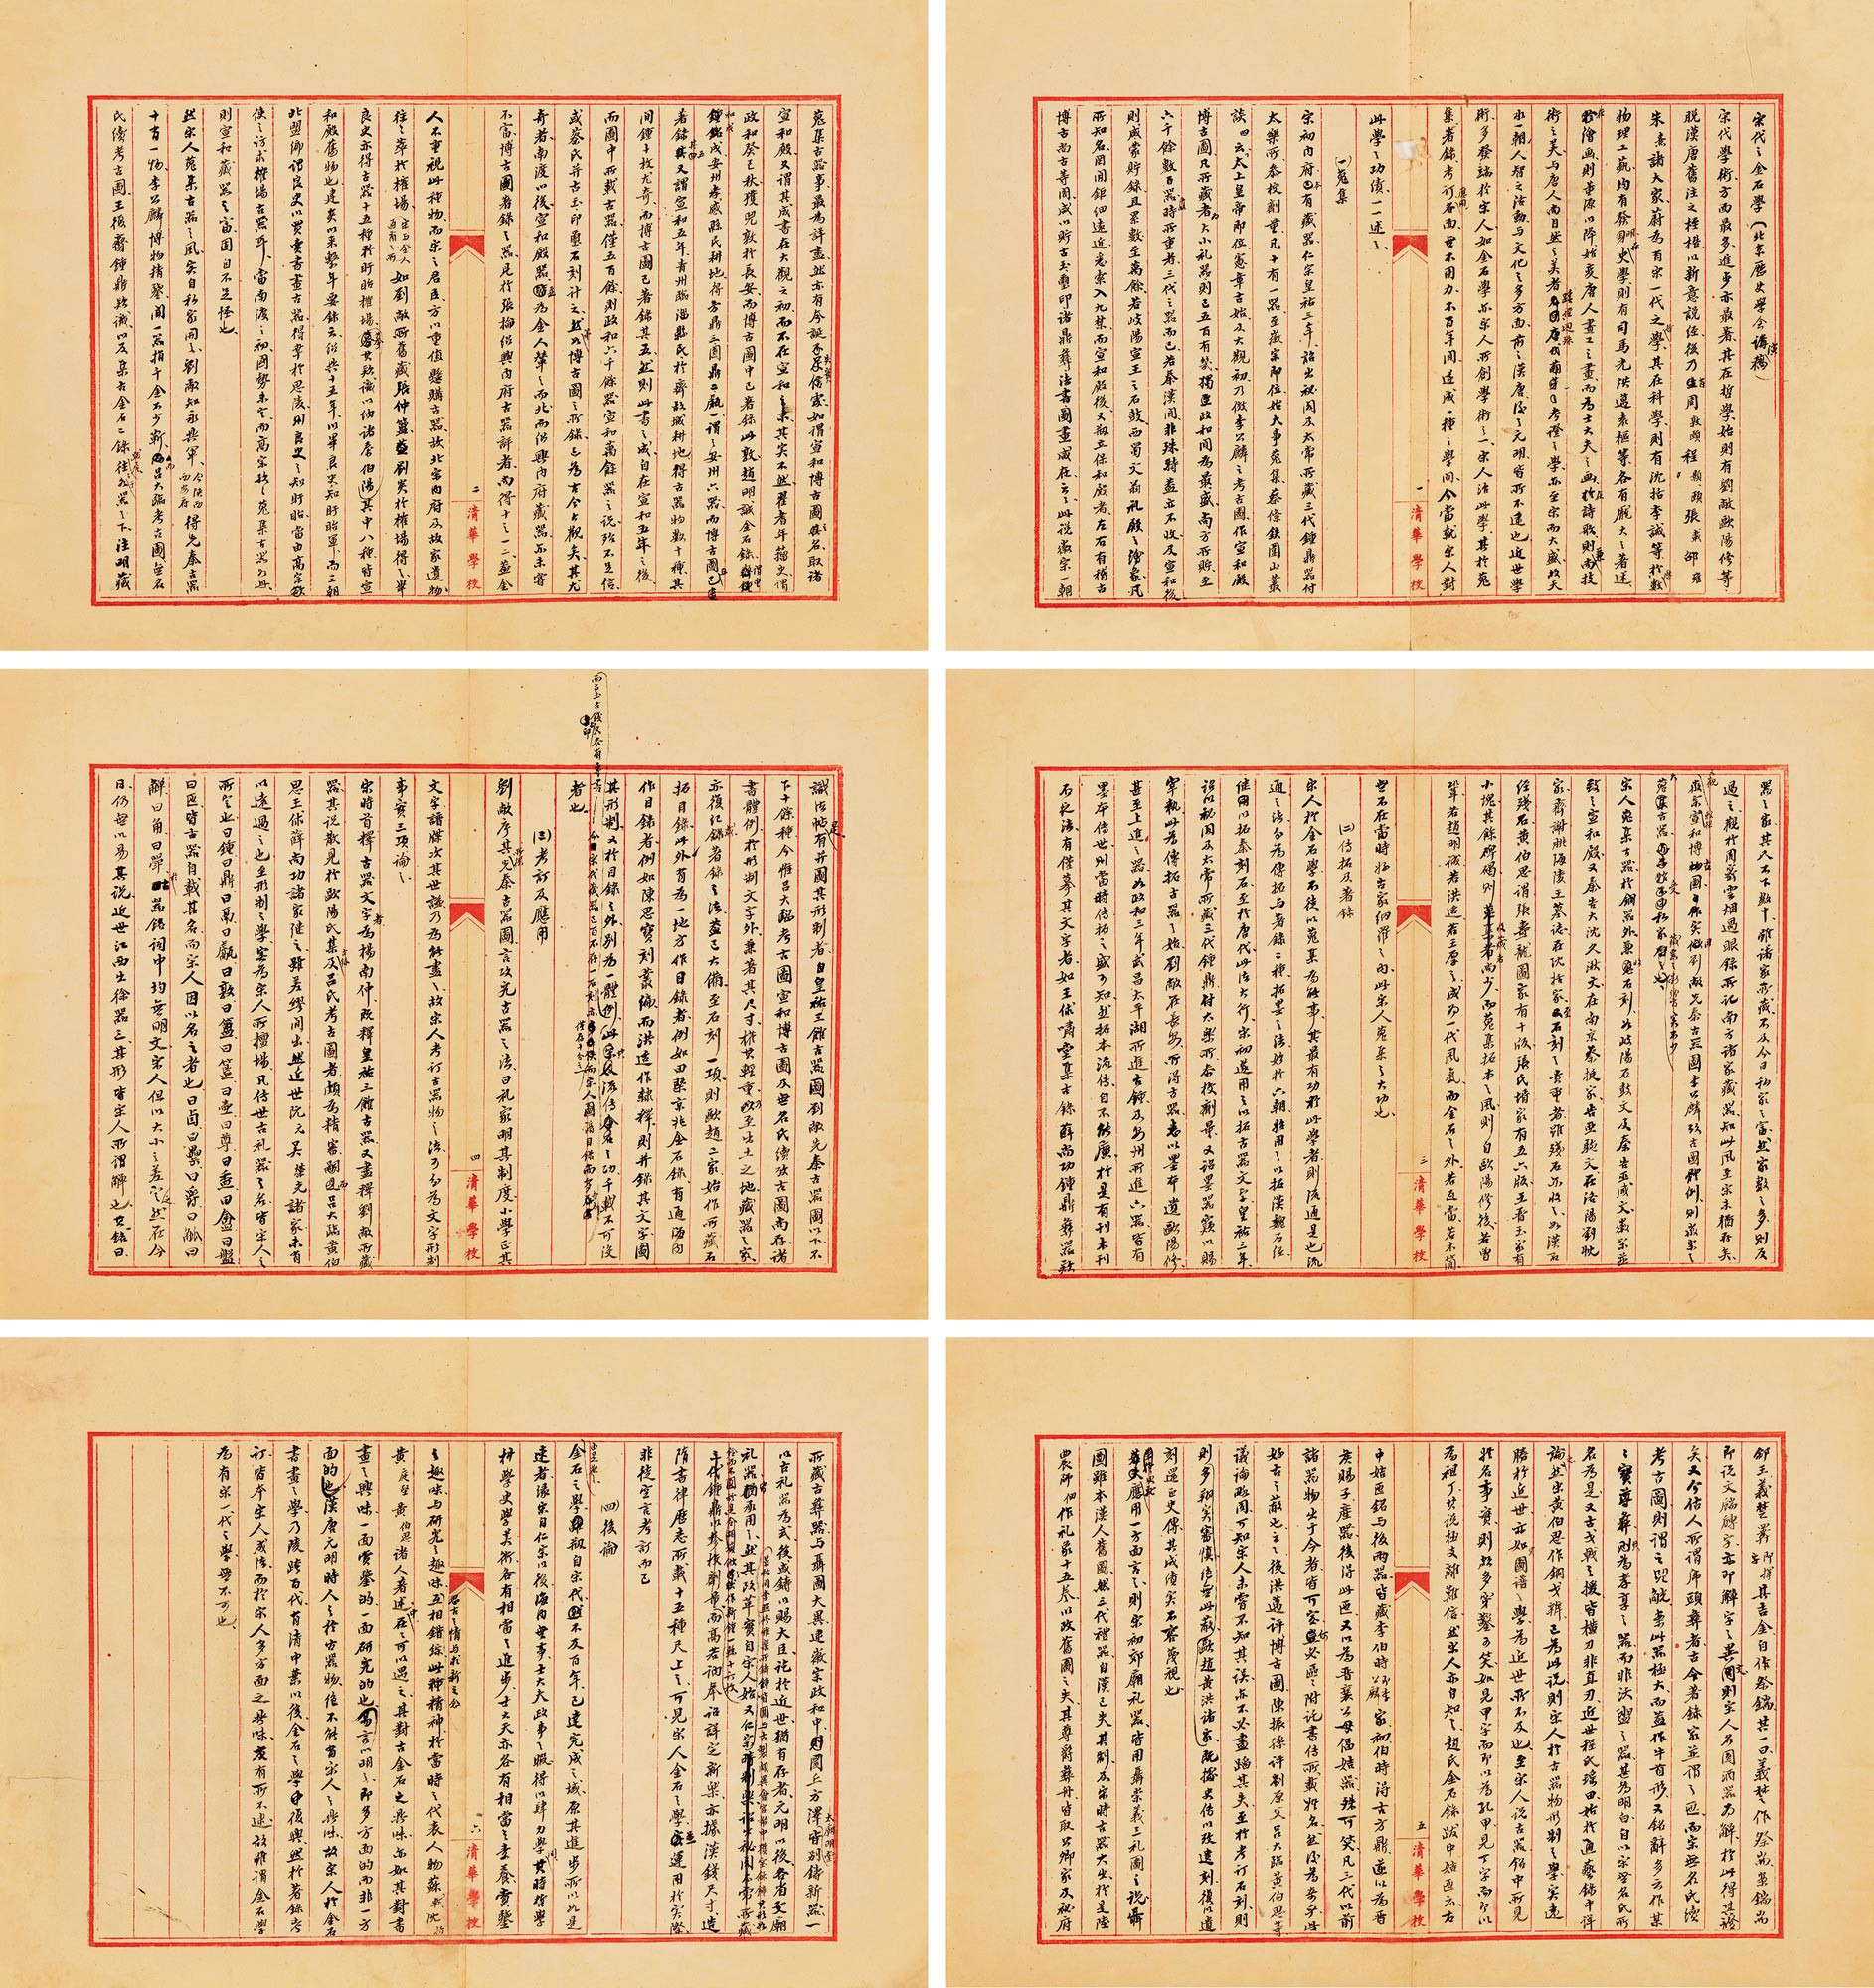 Calligraphy in Seal Script